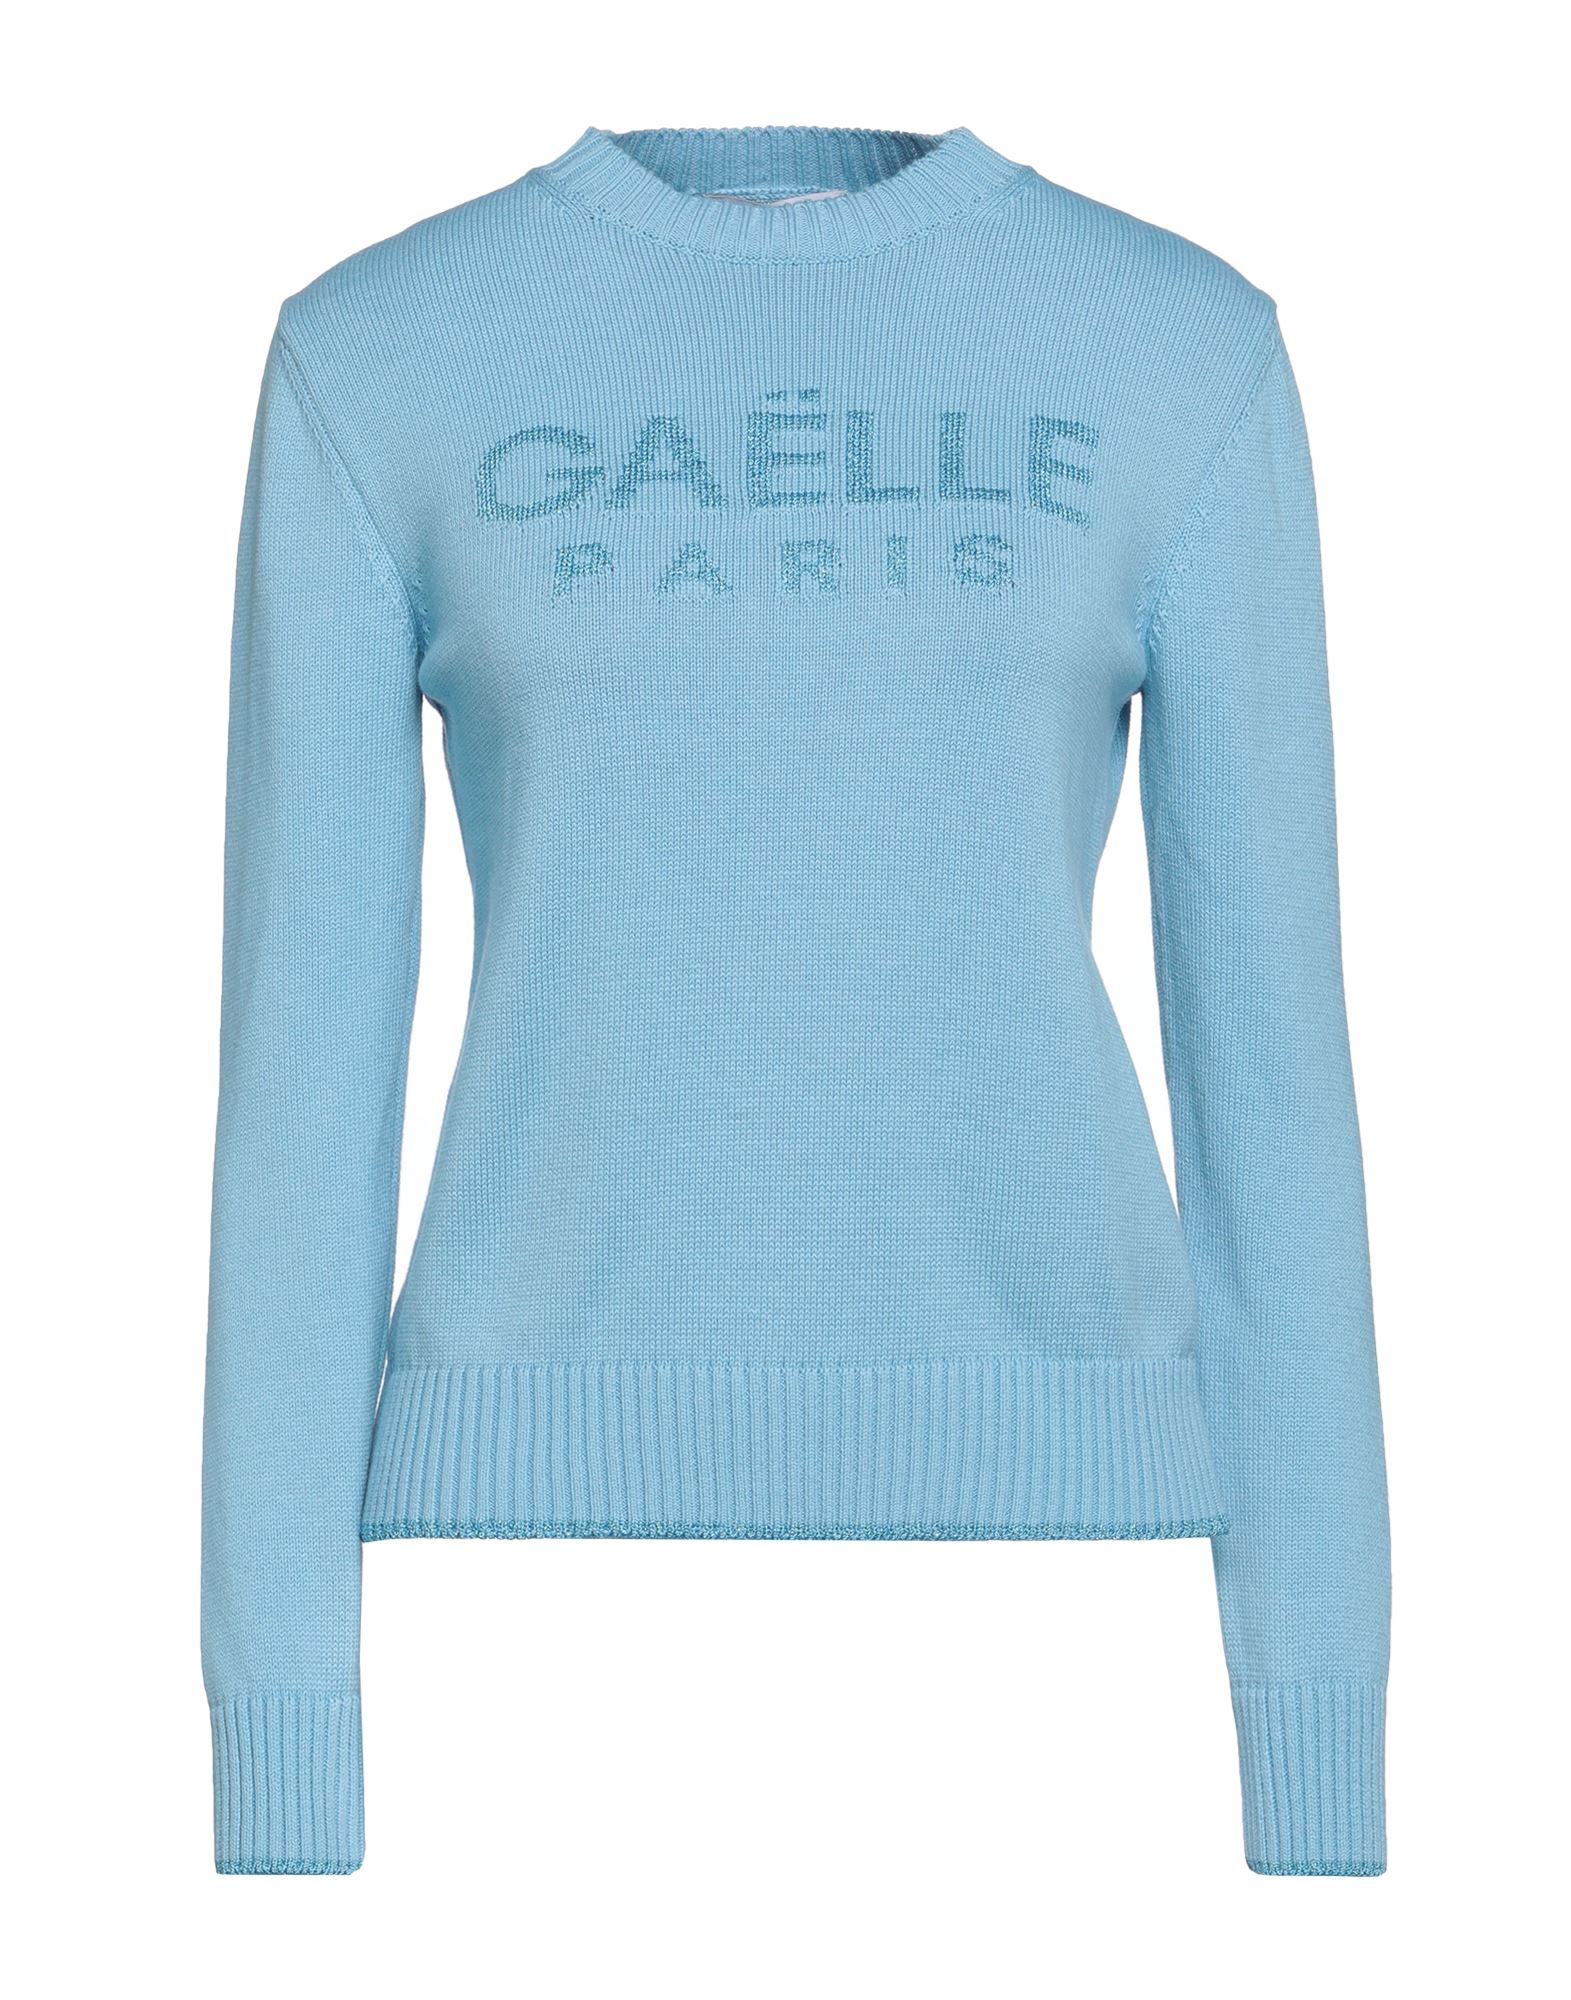 Gaelle Paris Sweaters In Blue